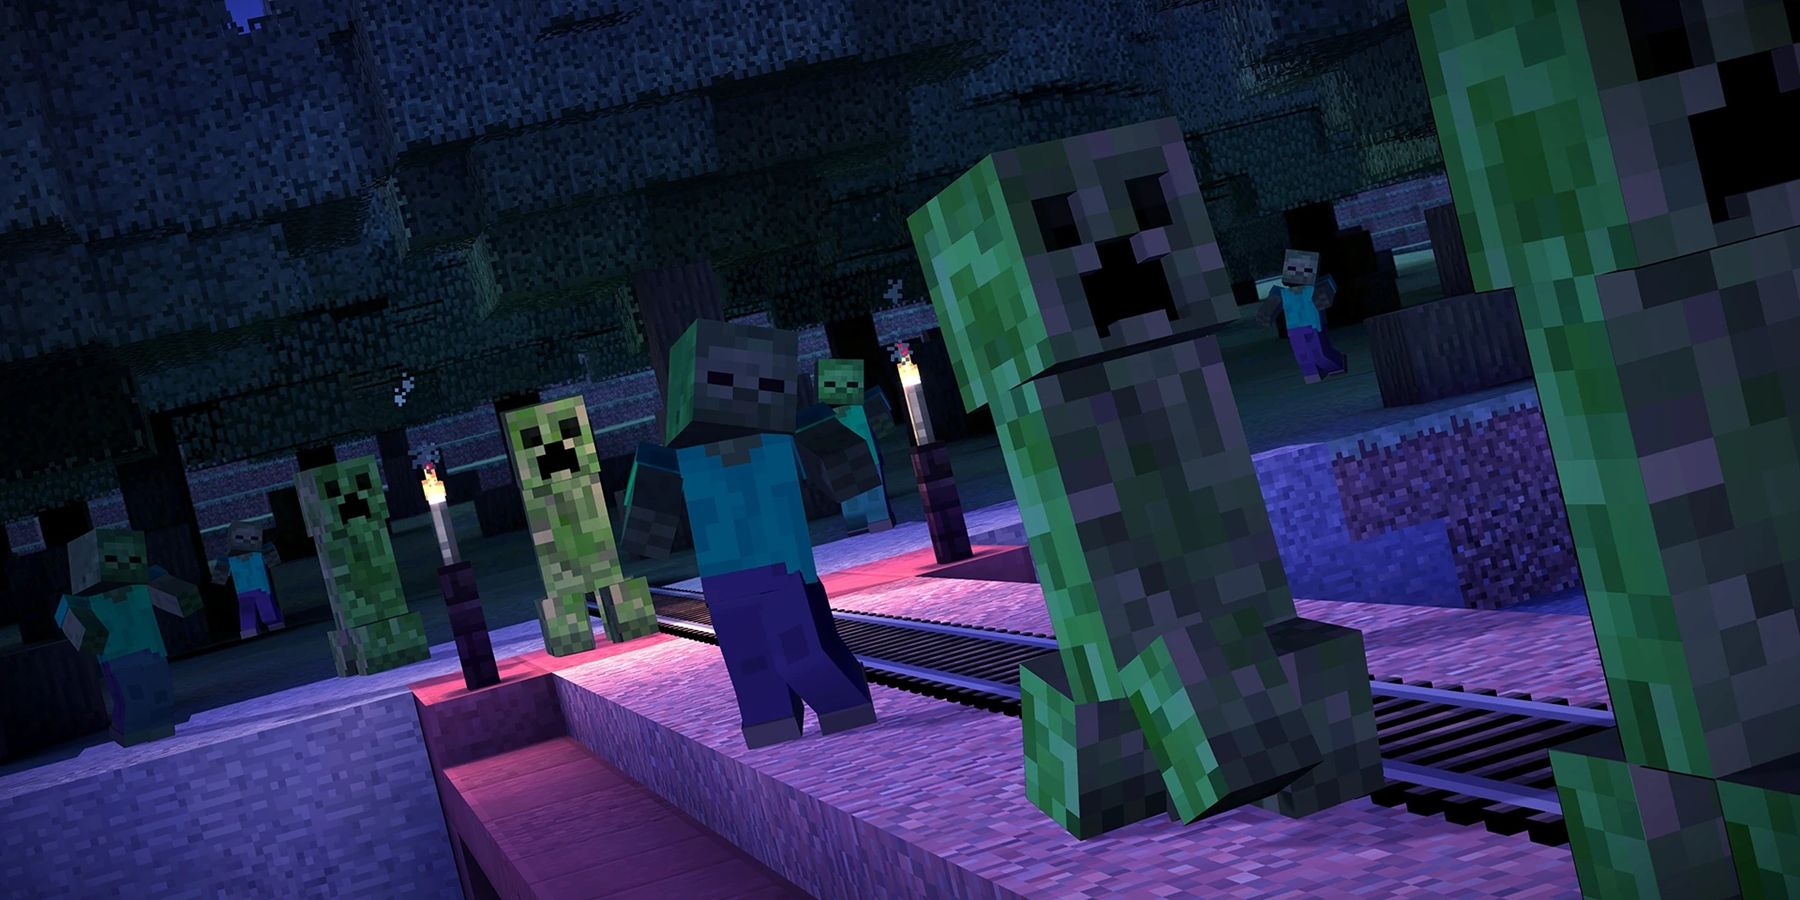 New Xbox Fridge Looks Like Minecraft Creeper